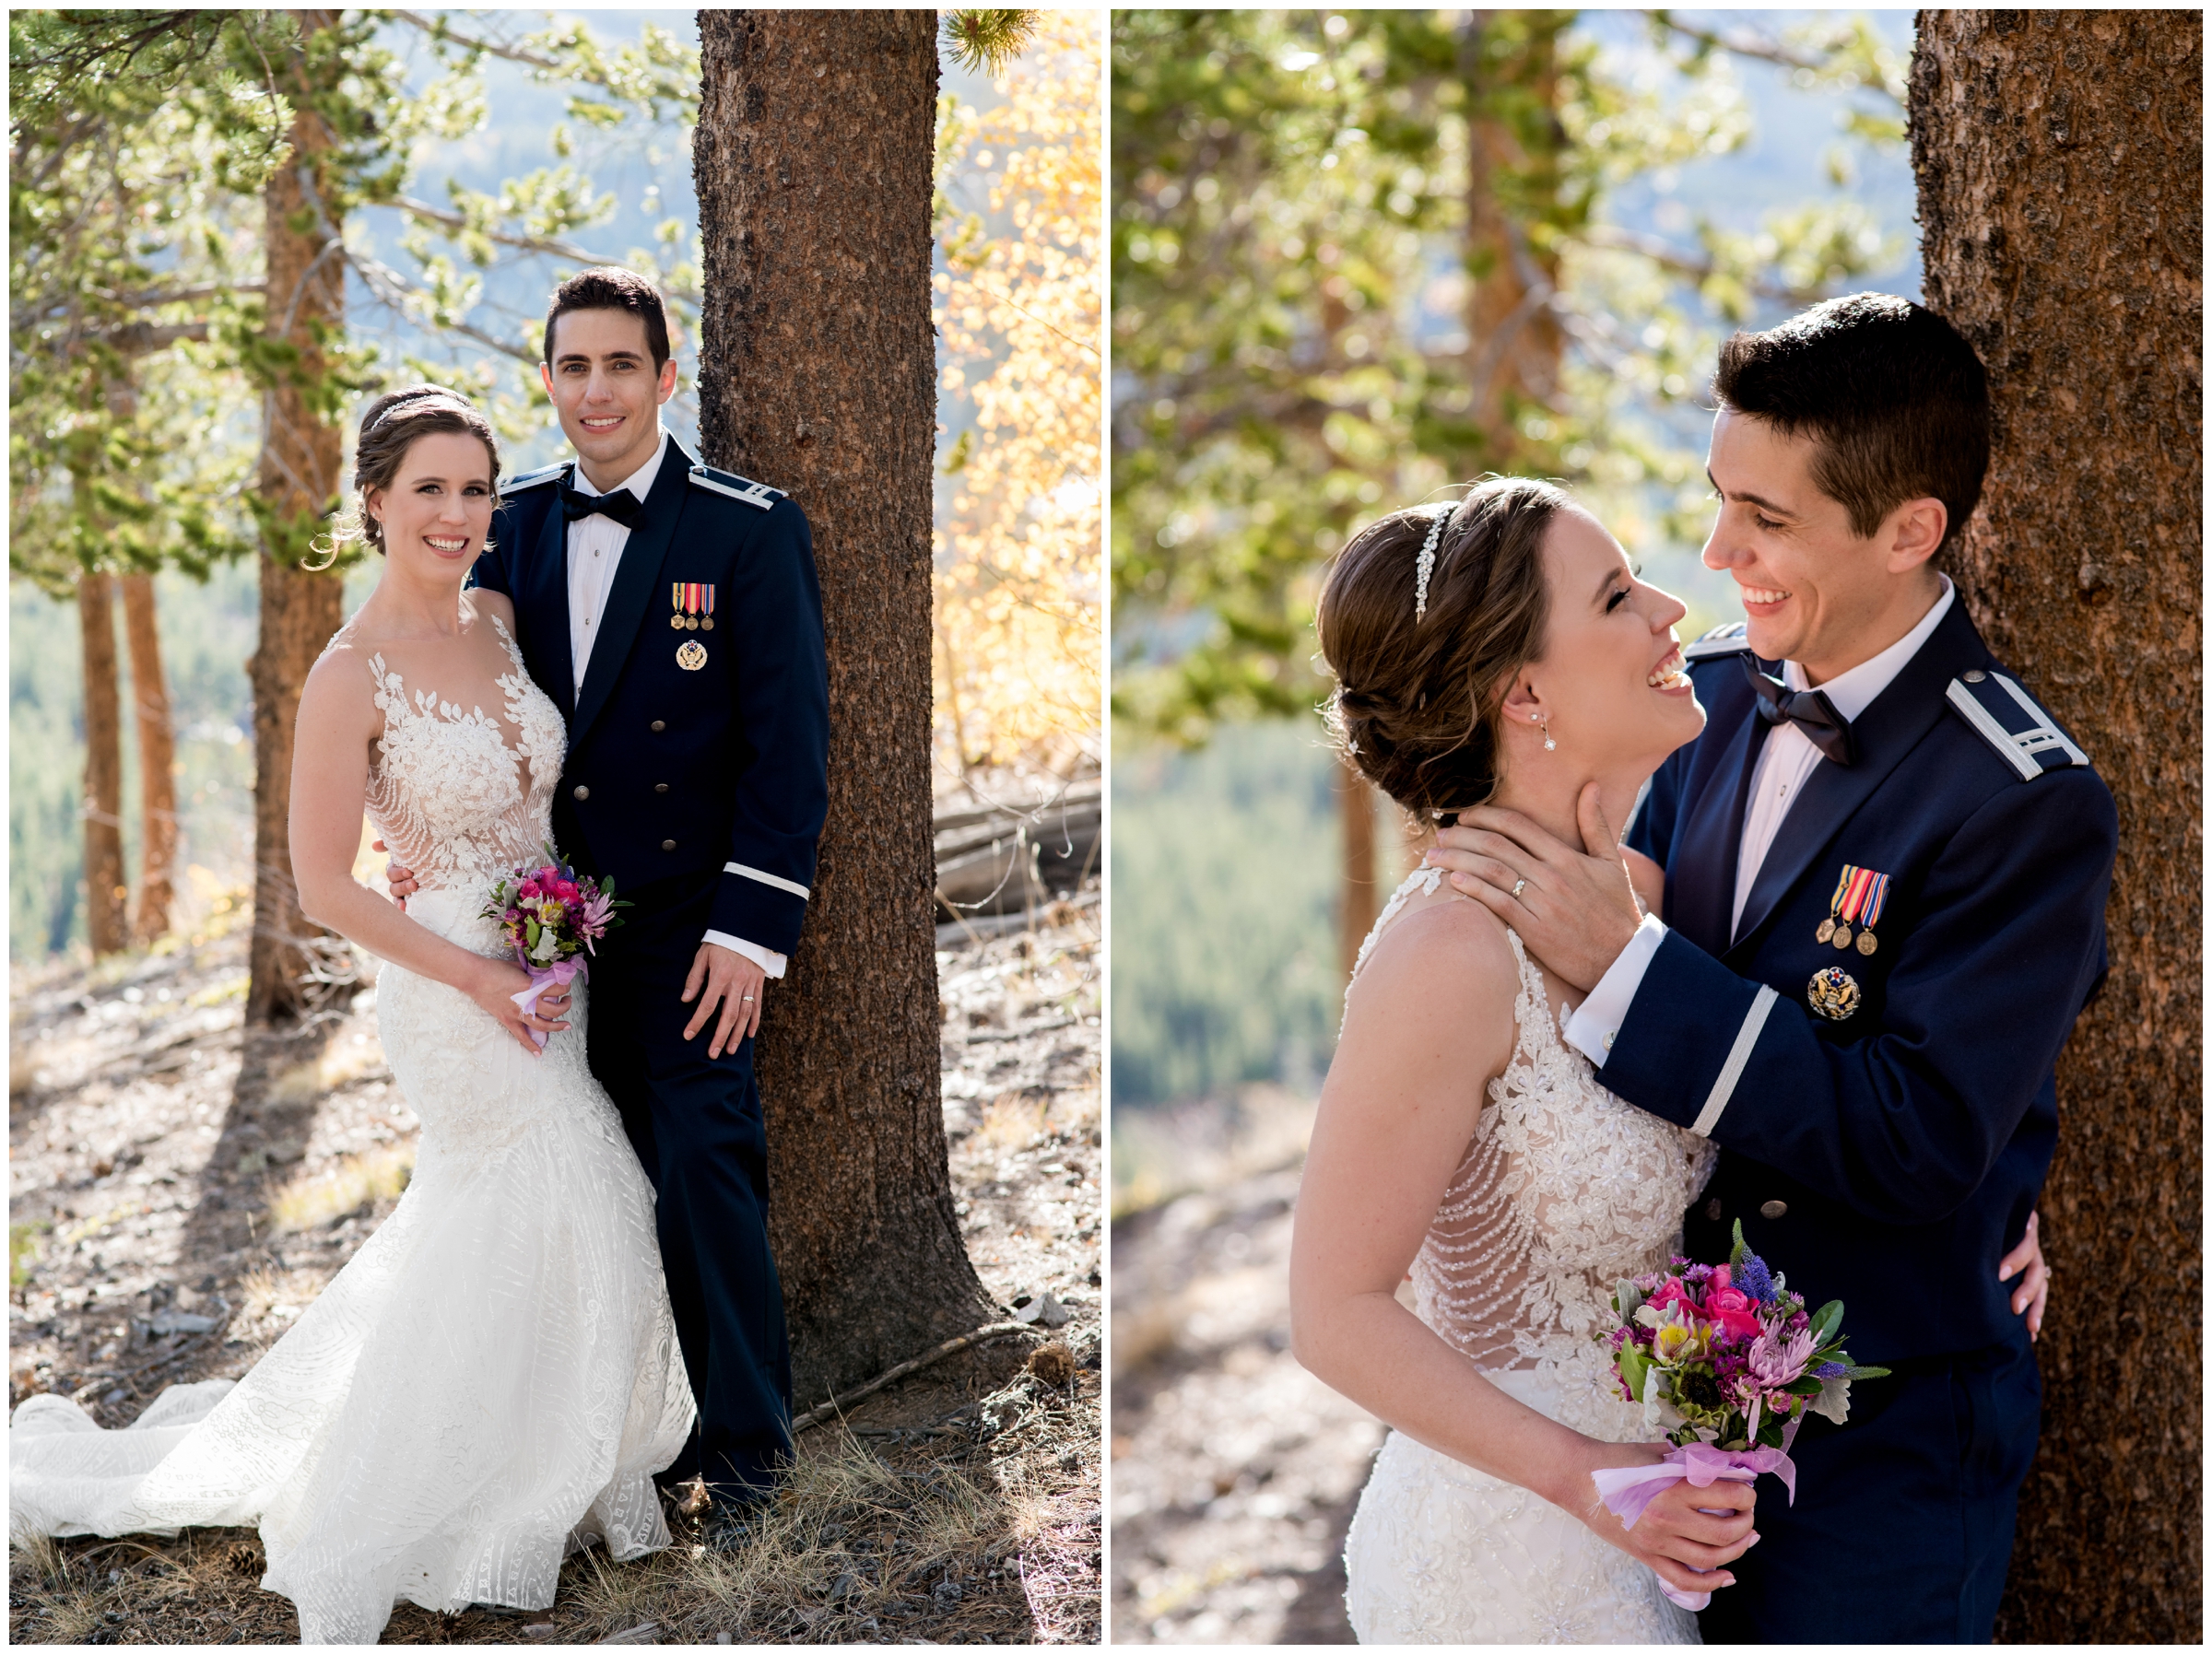 Lodge at Breckenridge Colorado wedding pictures during fall mountain wedding 